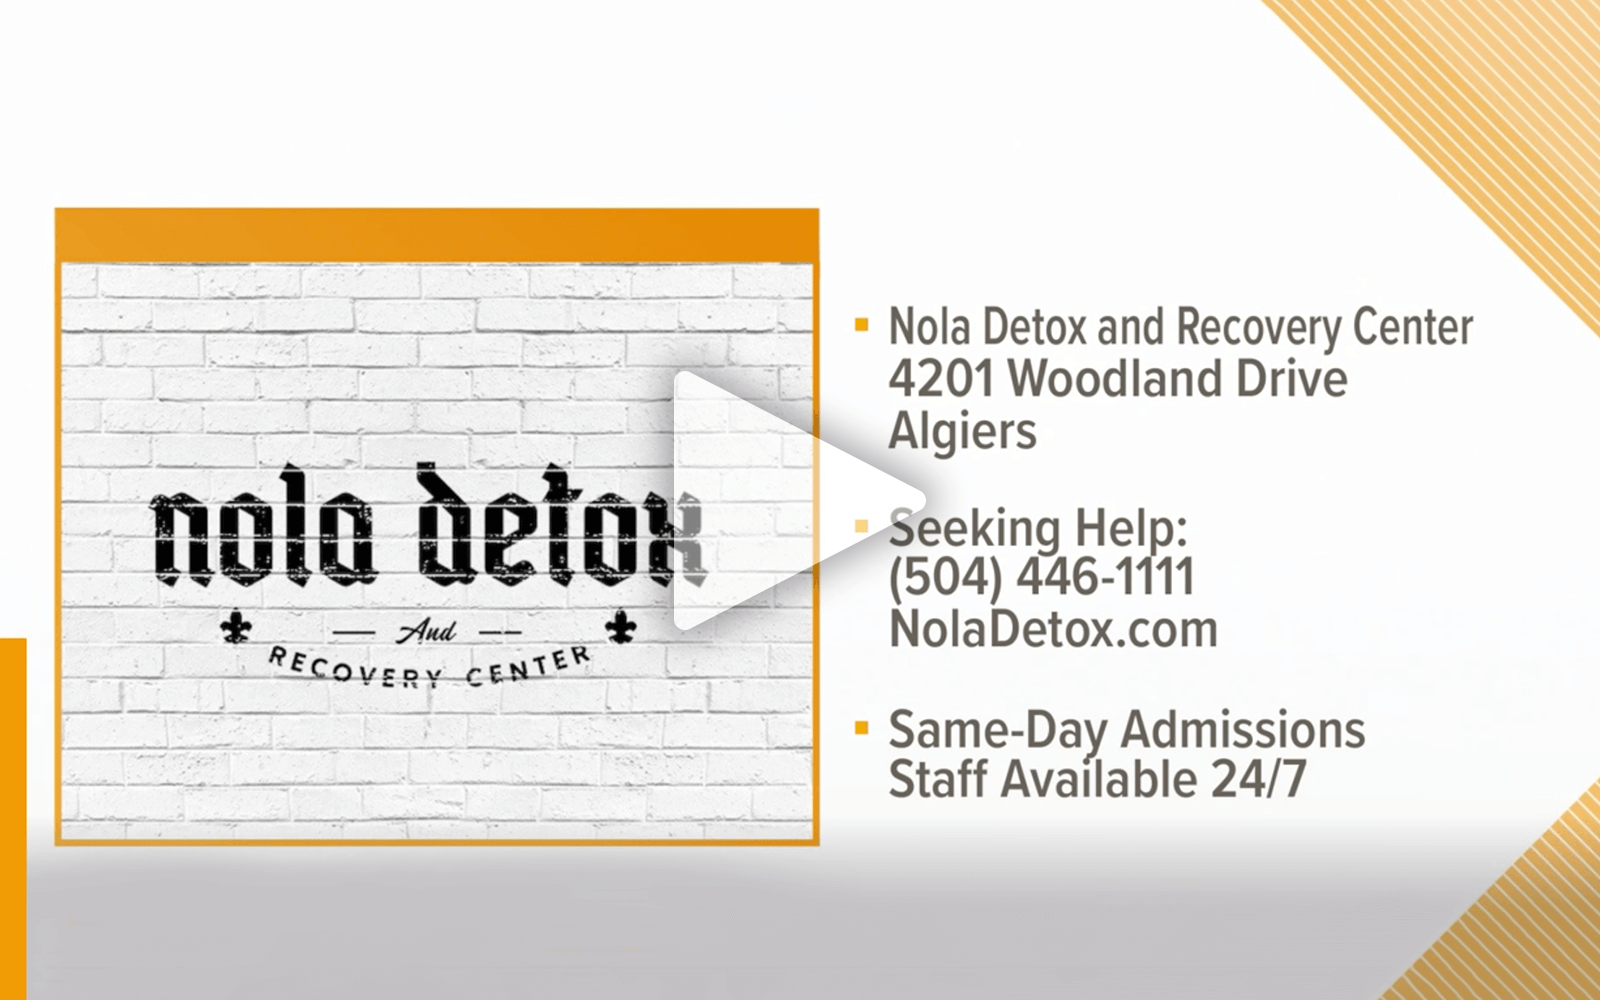 Hurricane Ida Delays Addiction Treatment - NOLA Detox and Recovery Center